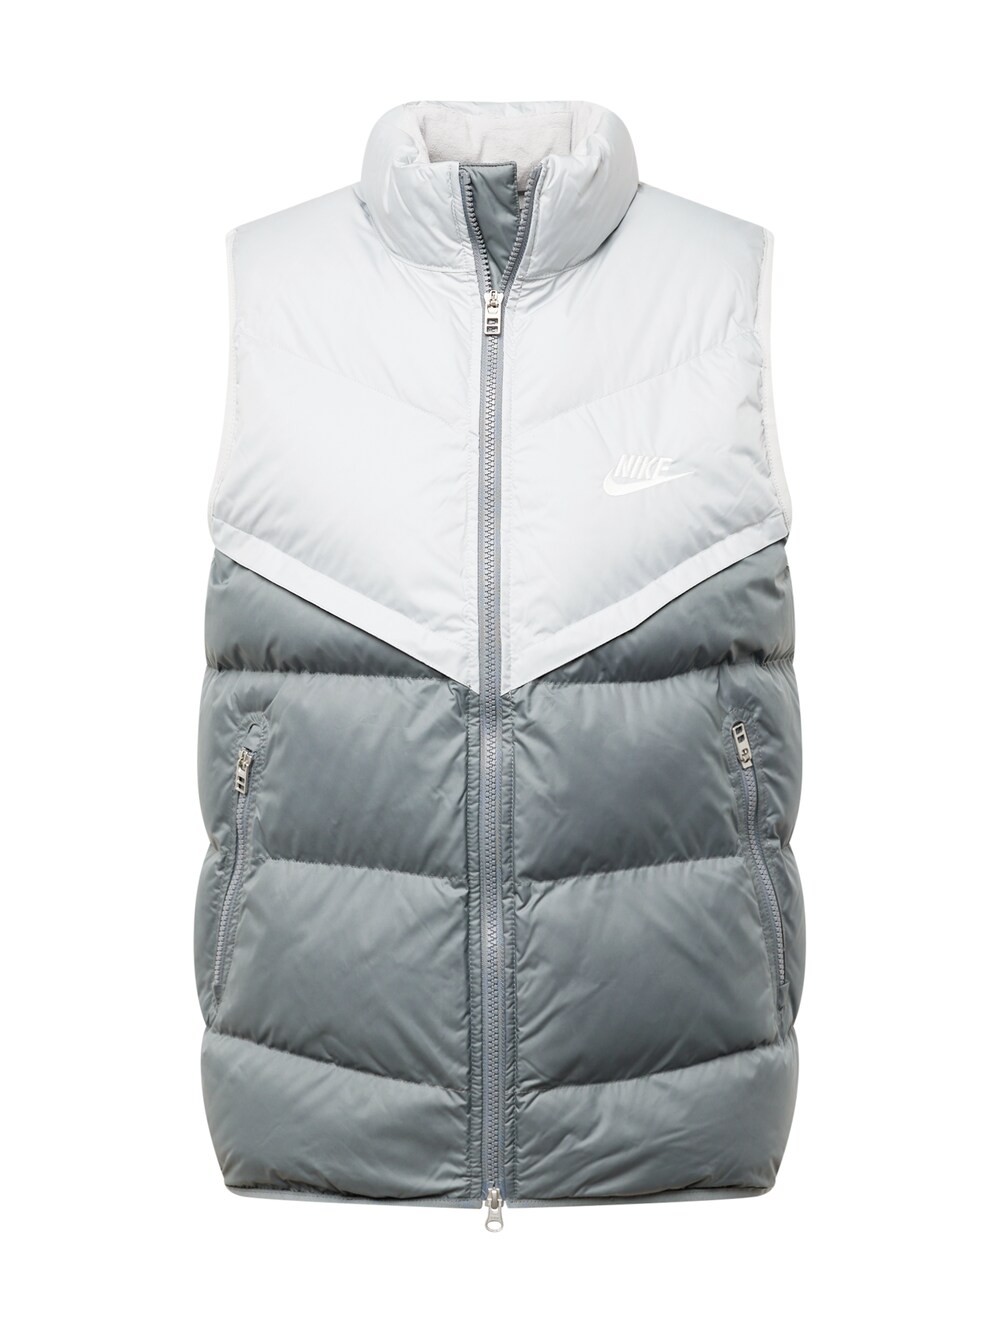 Жилет Nike Sportswear, серый/светло-серый пуховик nike hooded серый светло серый